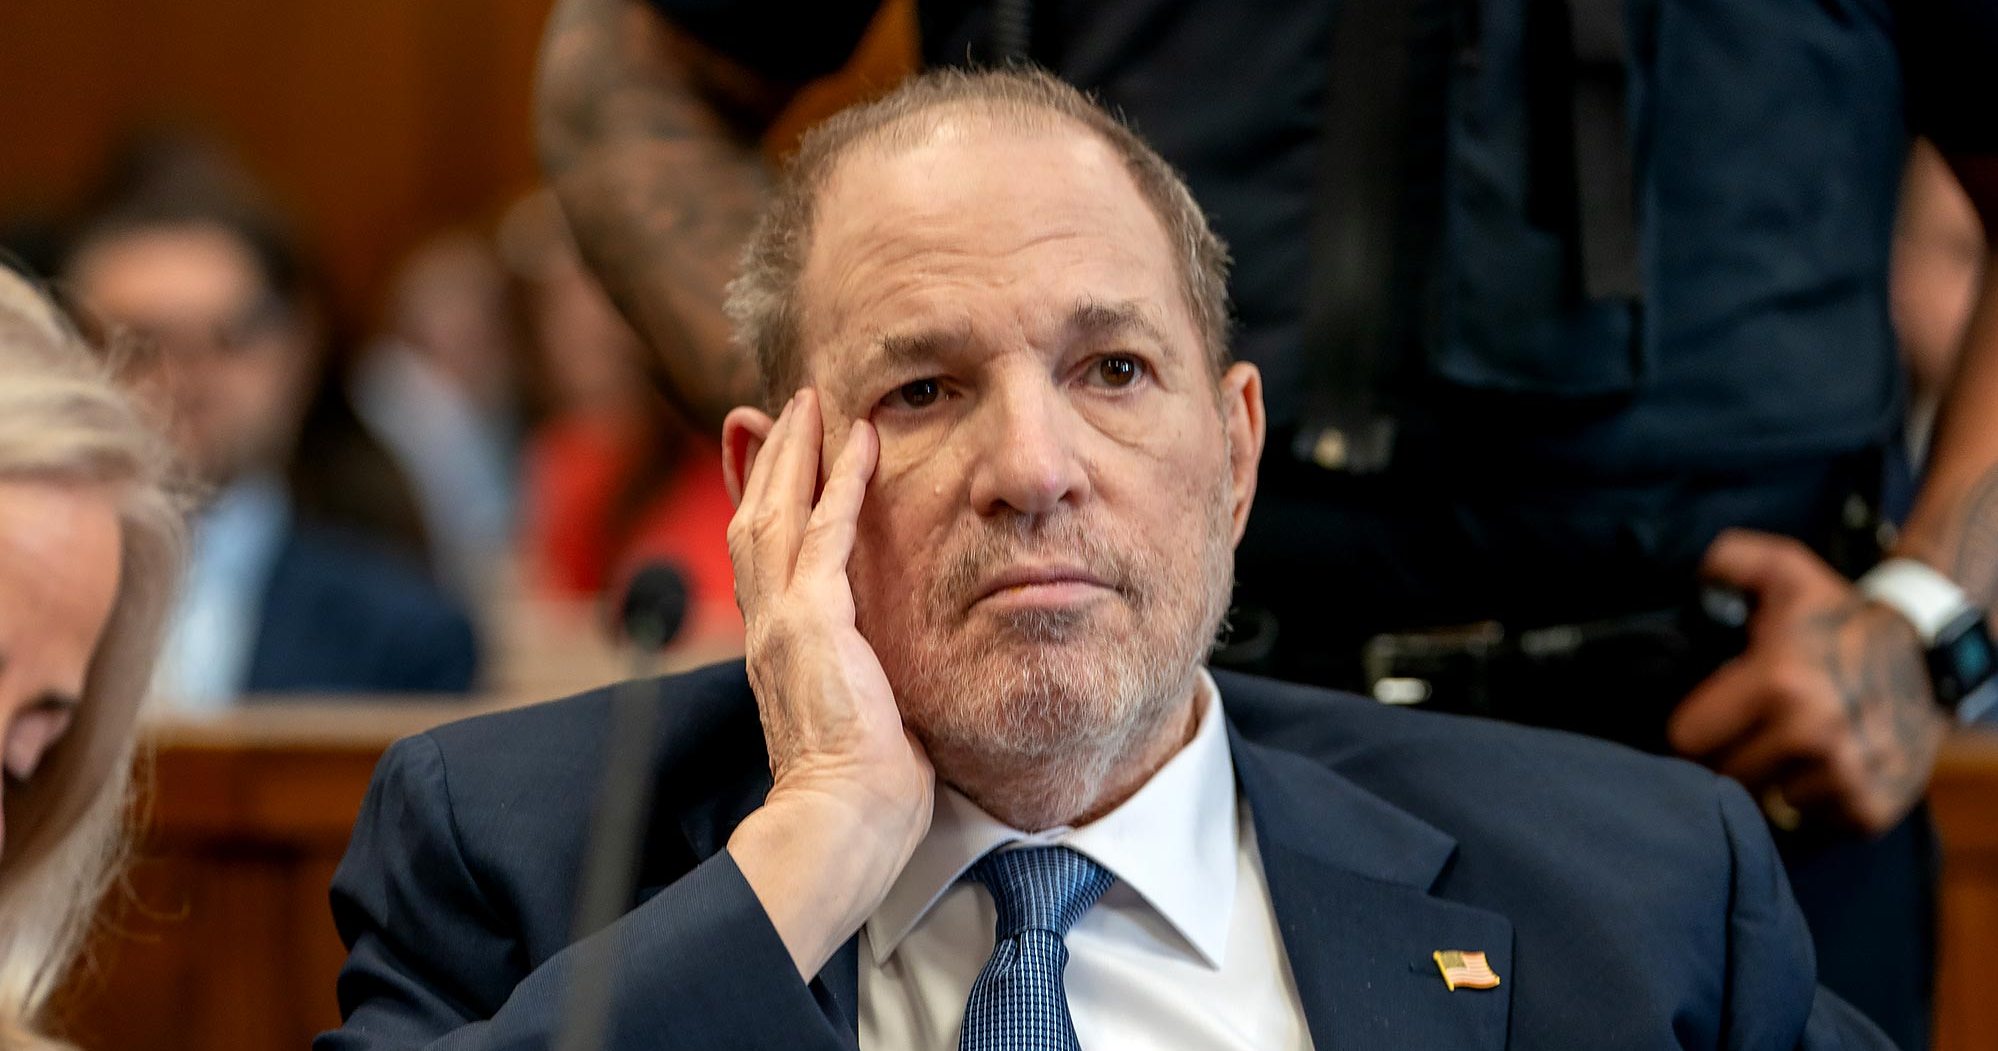 Harvey Weinstein Appears in Court in Wheelchair, Will Face Retrial